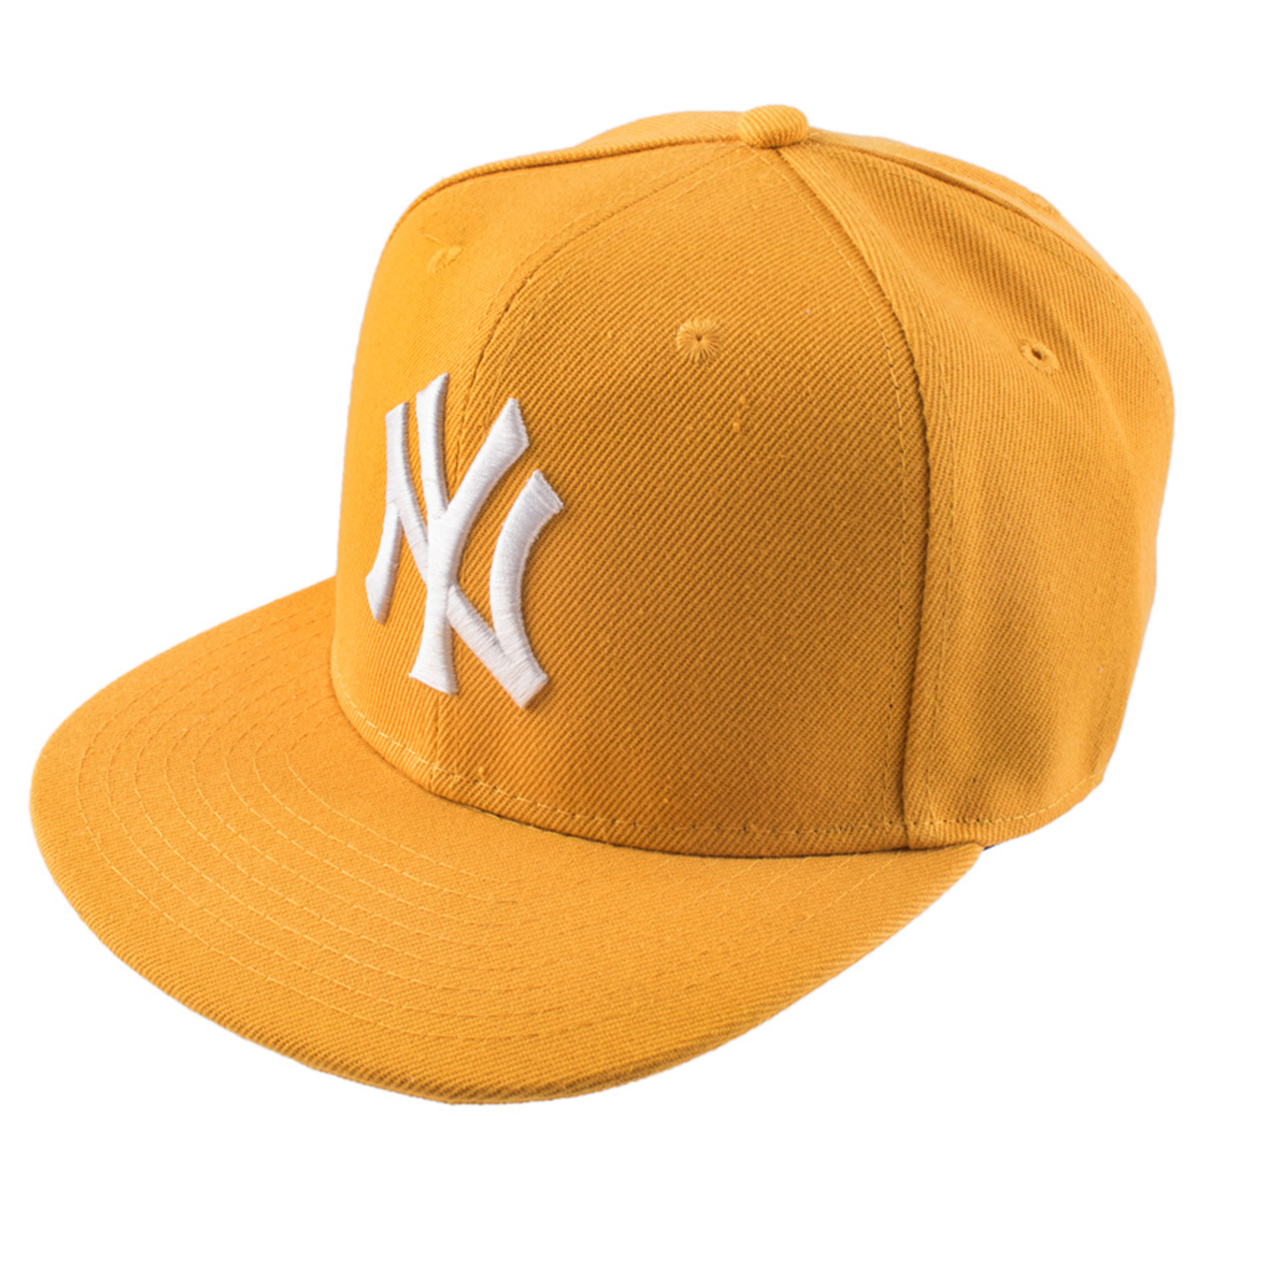  کلاه کپ مدل NY02